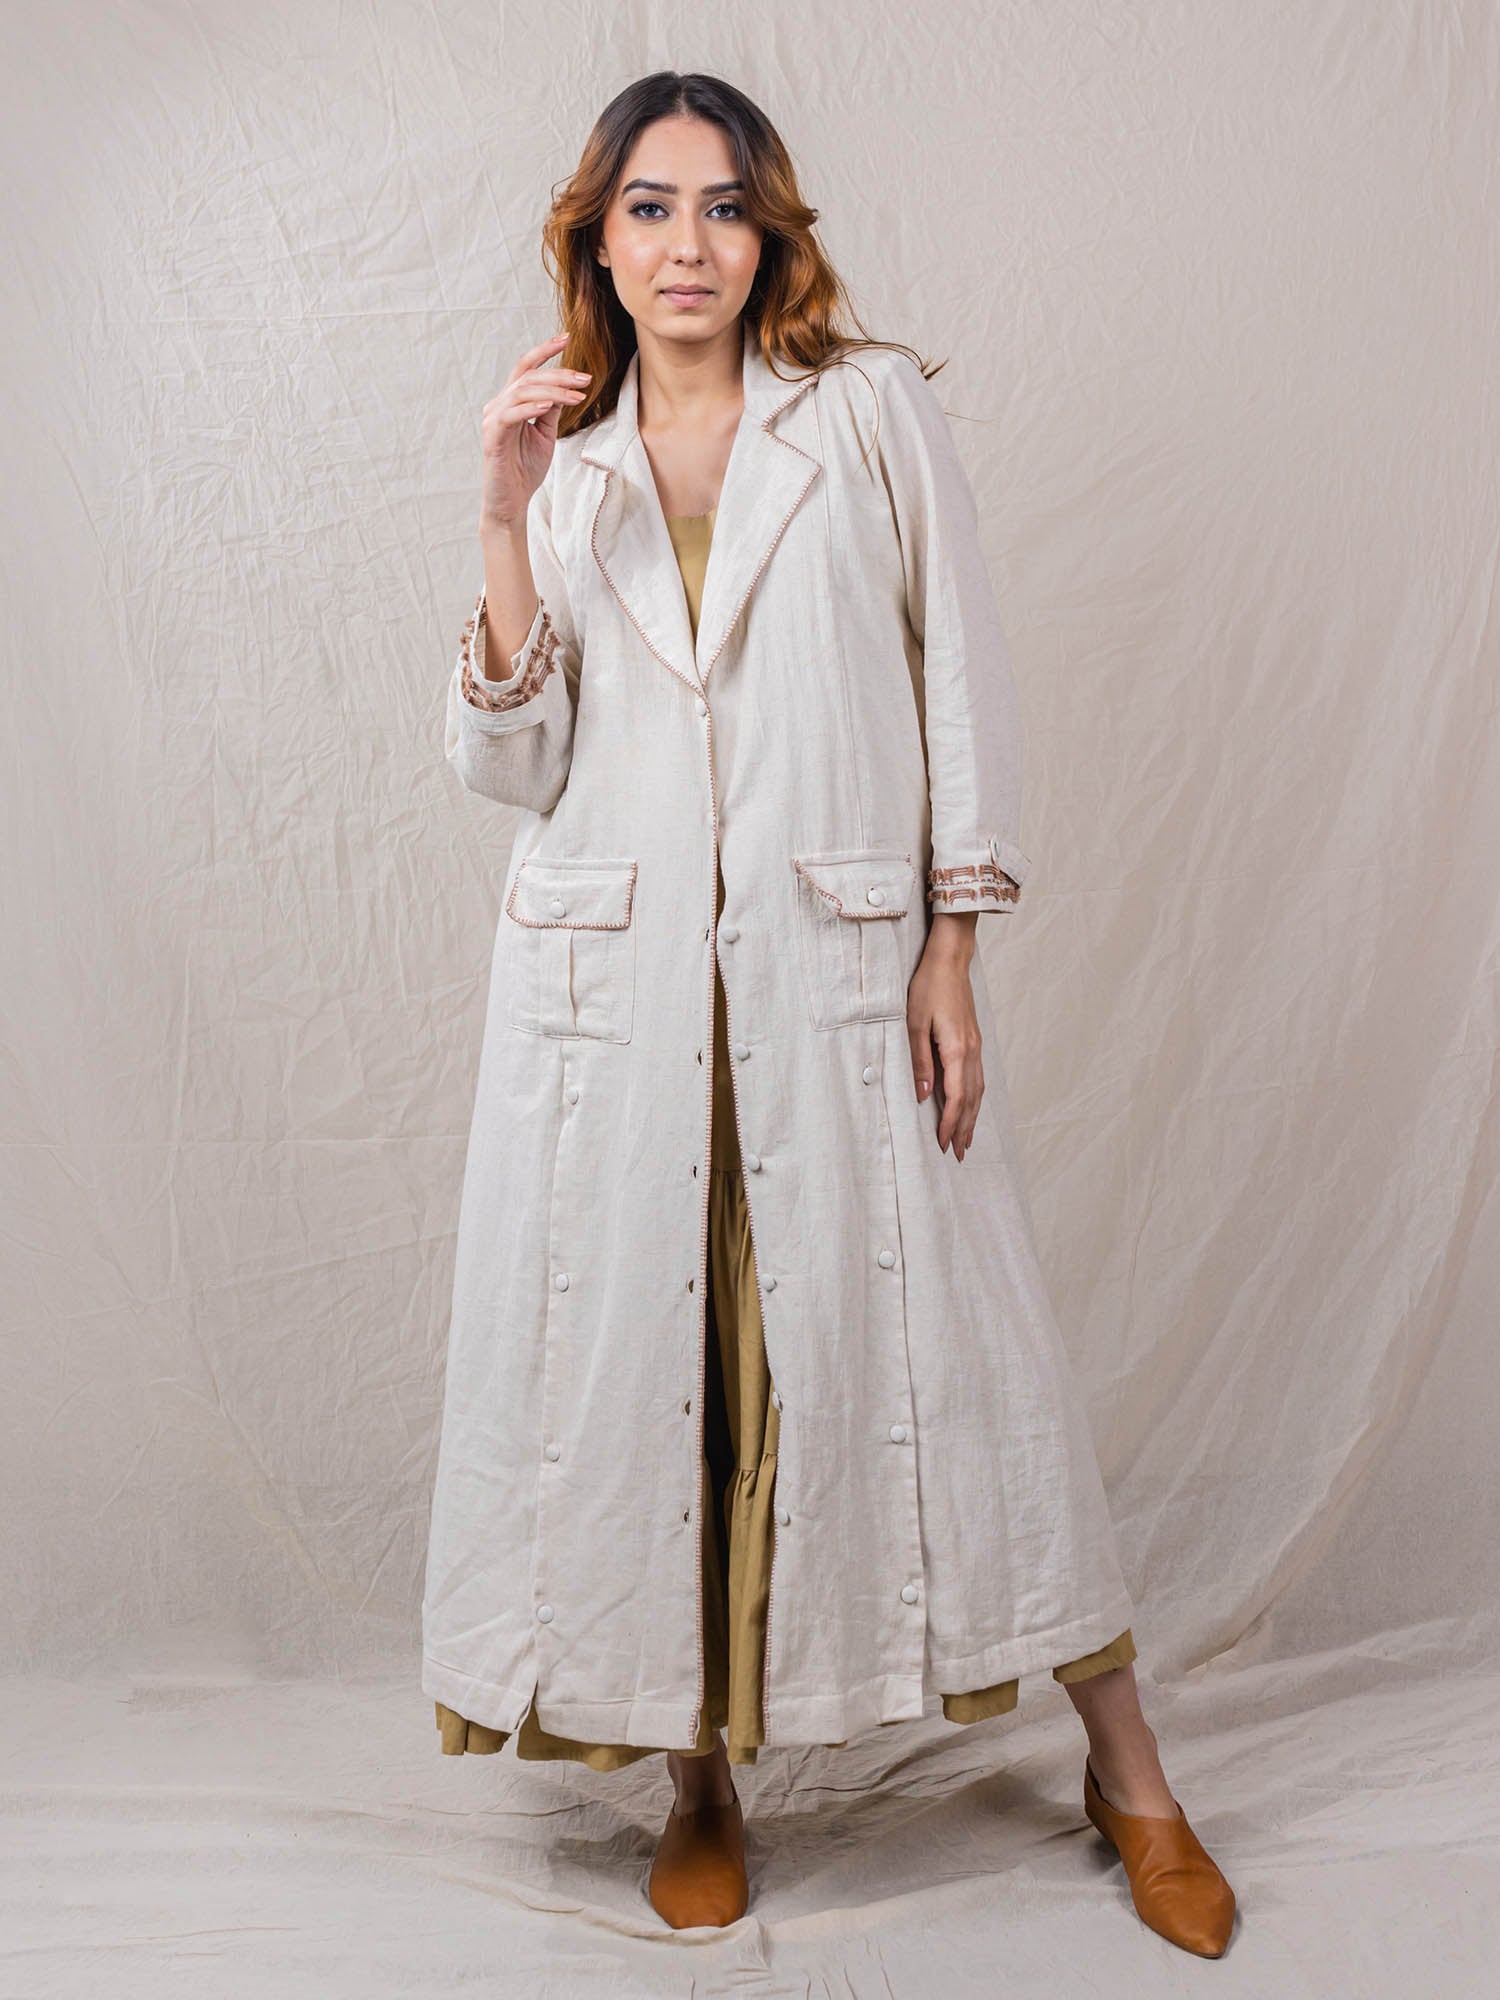 R & M Richards Women's Two-Piece Ity Floral-Print Jacket Dress - Macy's